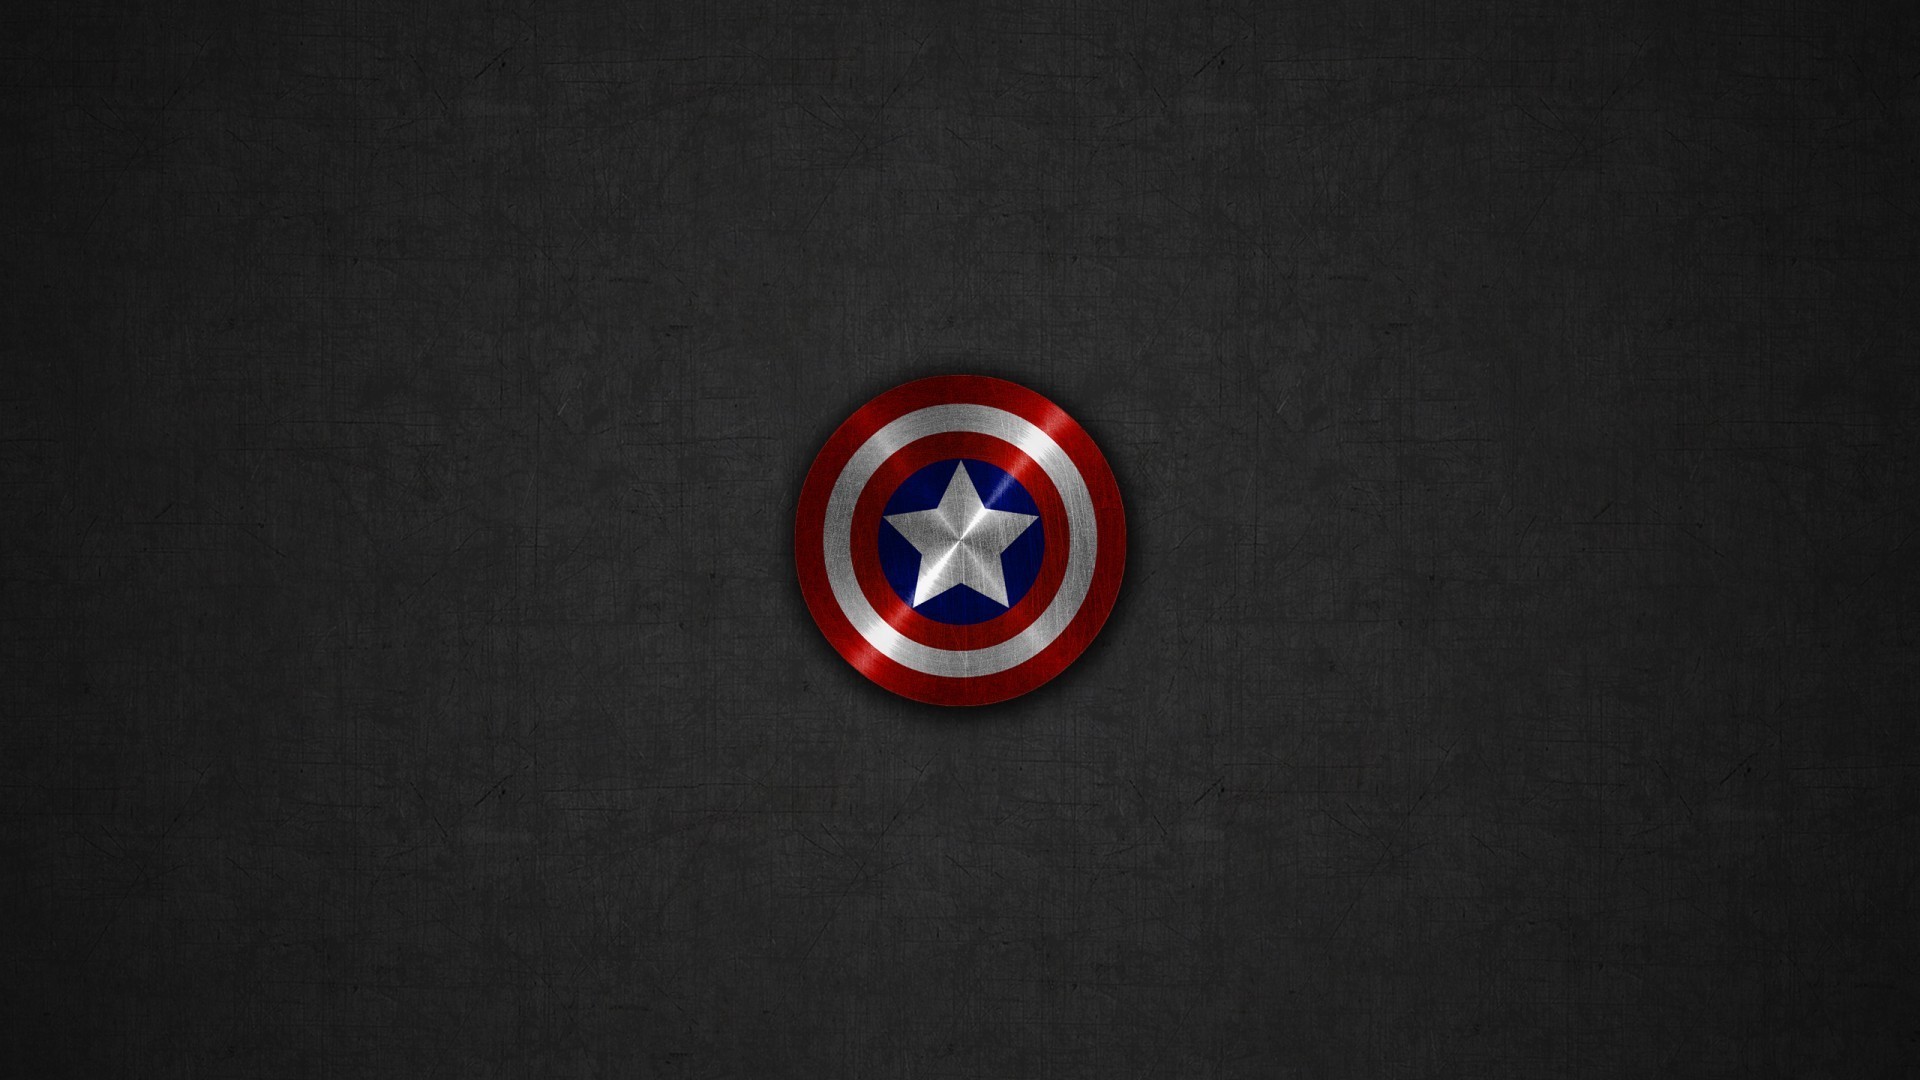 1920x1080 Captain America Shield Wallpapers HD Logo Brands Wallpaper 2560x1440.  2560x1440 Captain America Shield Wallpapers HD Logo Brands Wallpaper